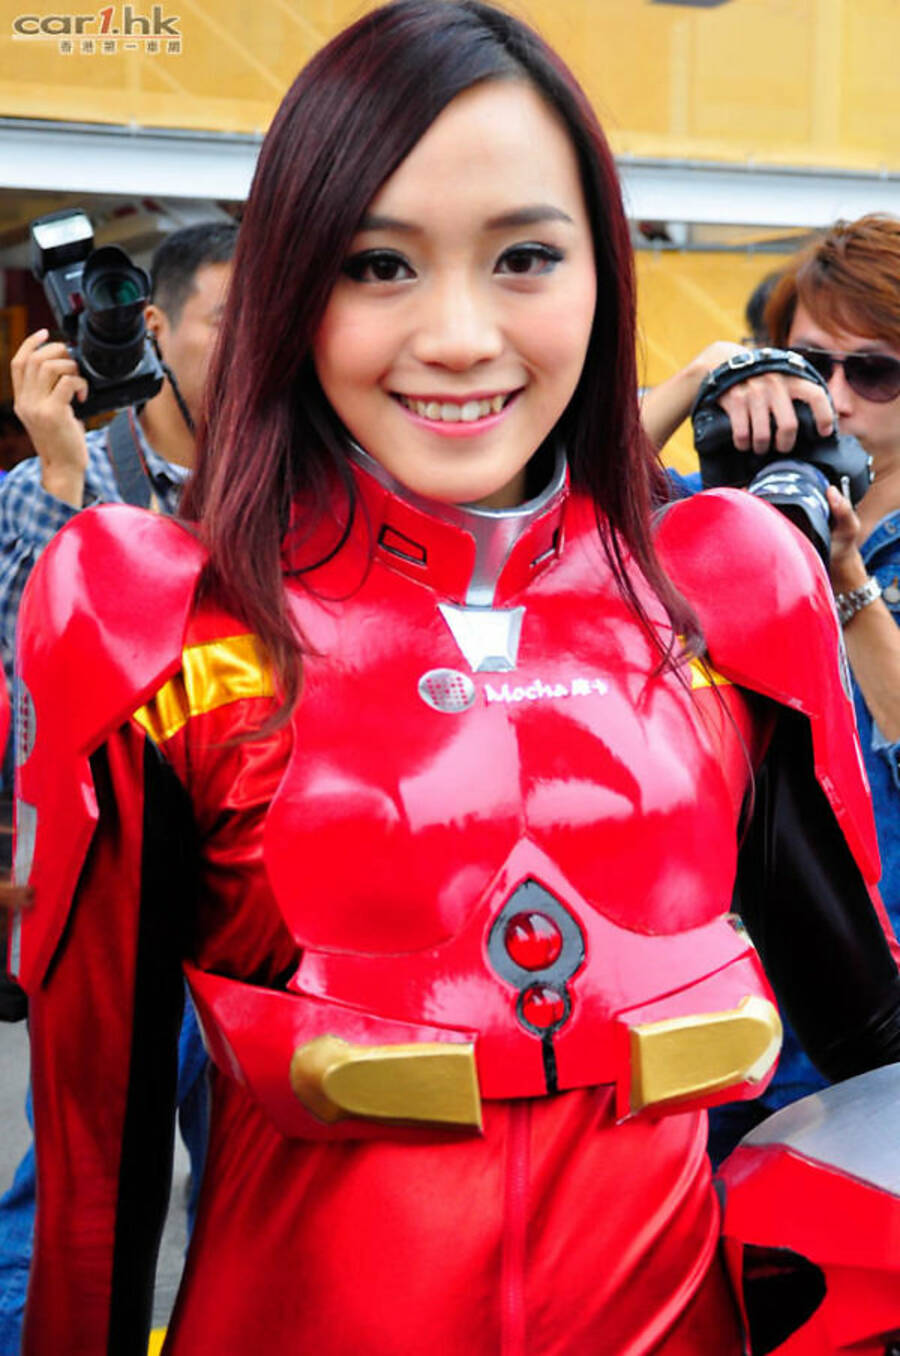 2012 grandprix macau race girl 1117 1 13 香港第一車網 Car1 hk